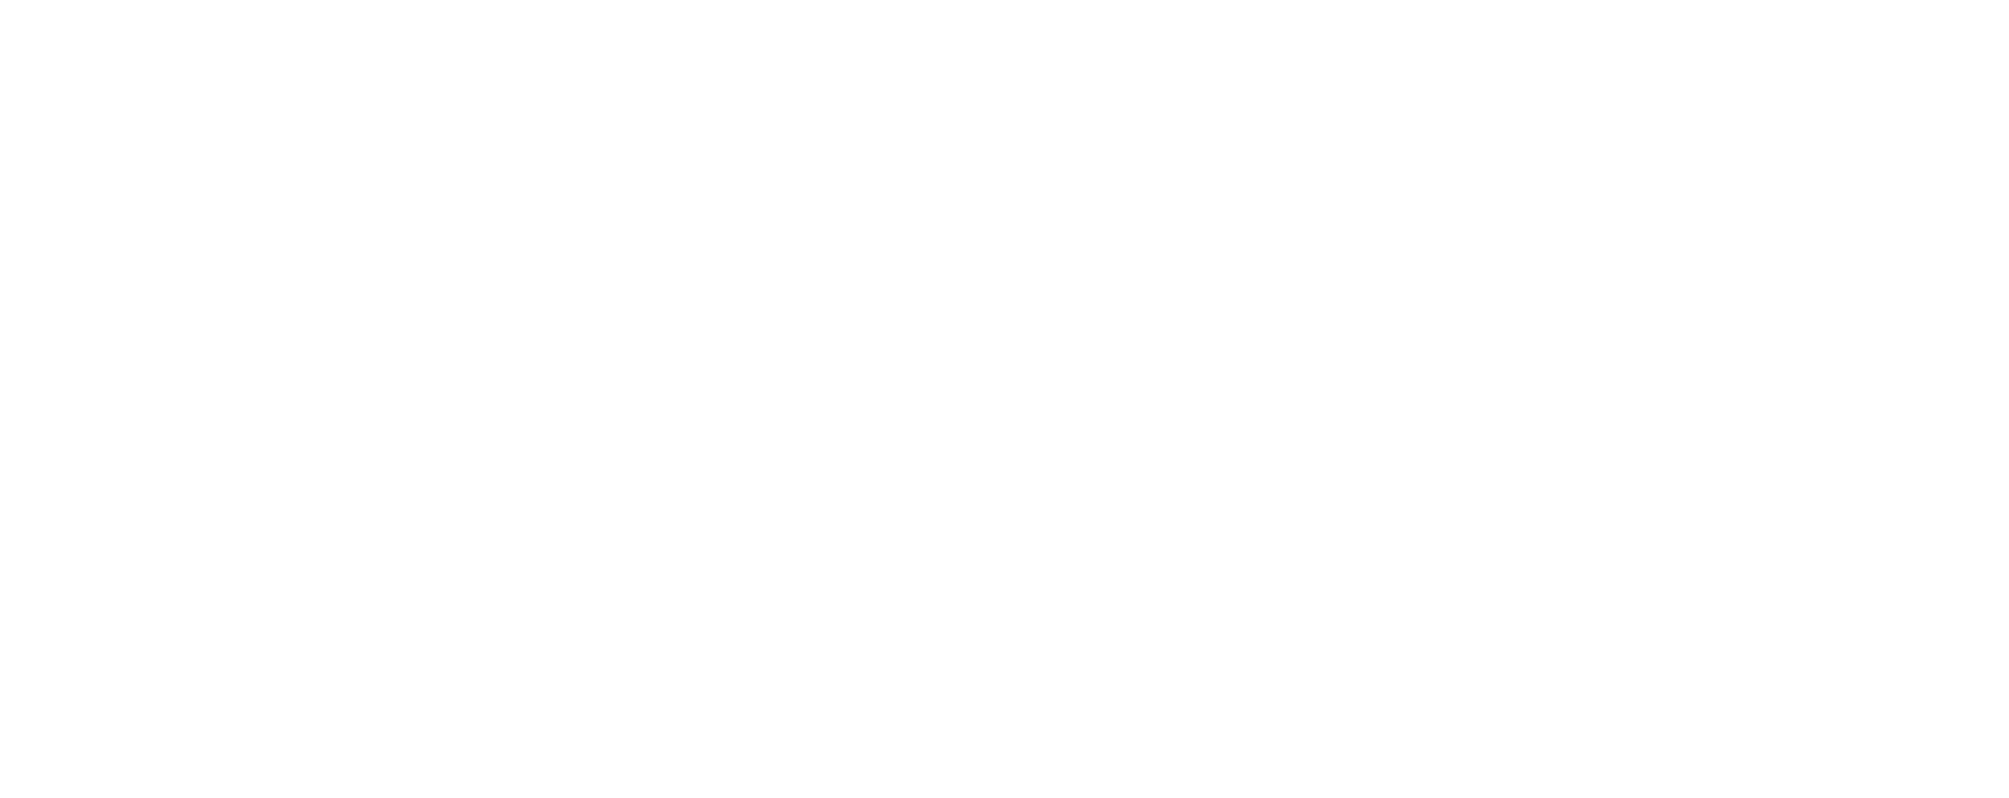 RE/MAX Global Go